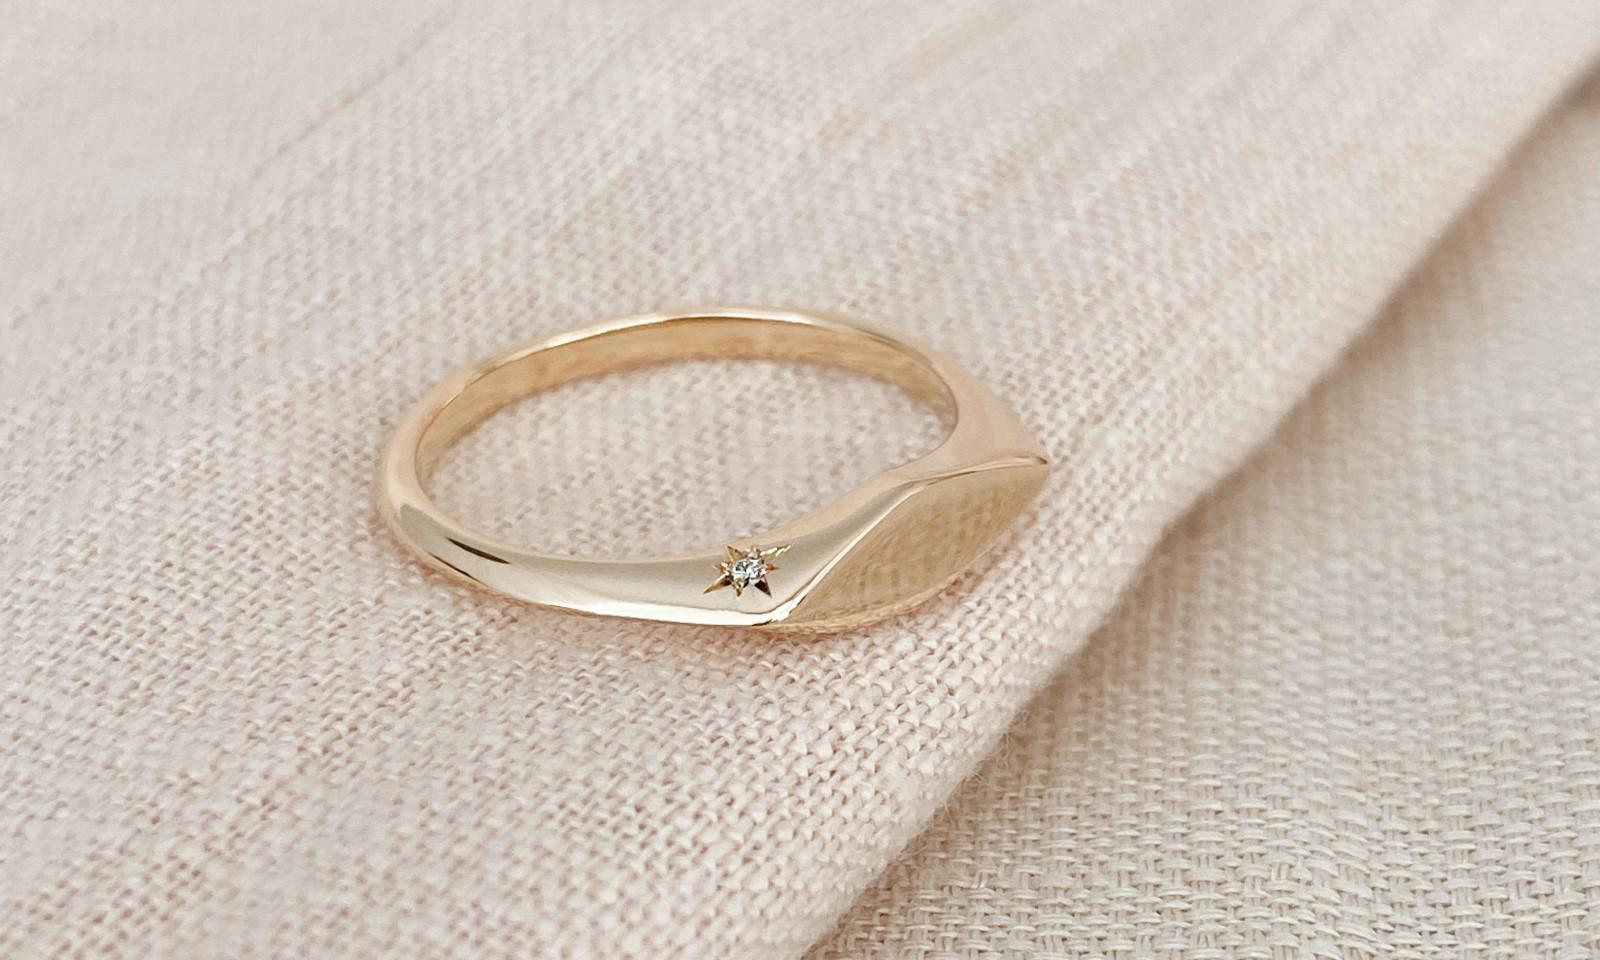 Custom gold signet engagement ring with diamond